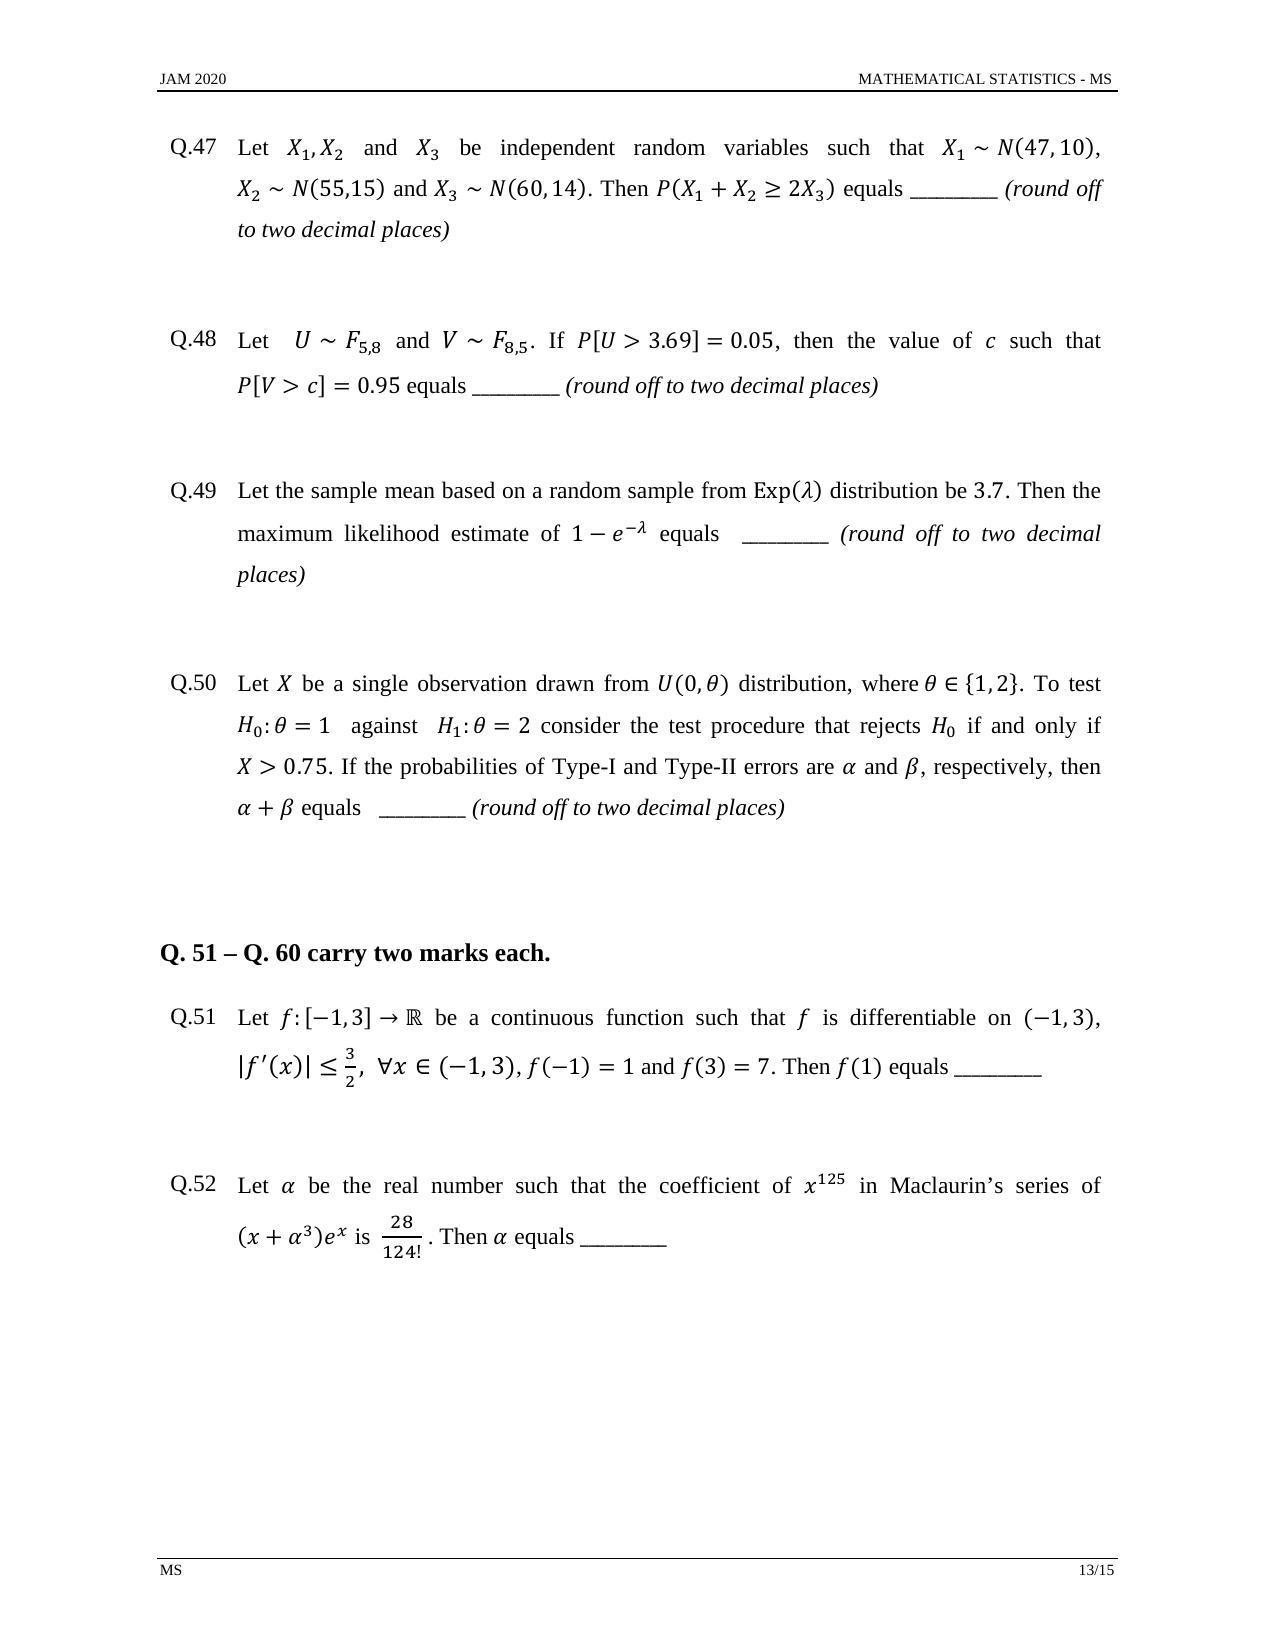 JAM 2020: MS Question Paper - Page 13